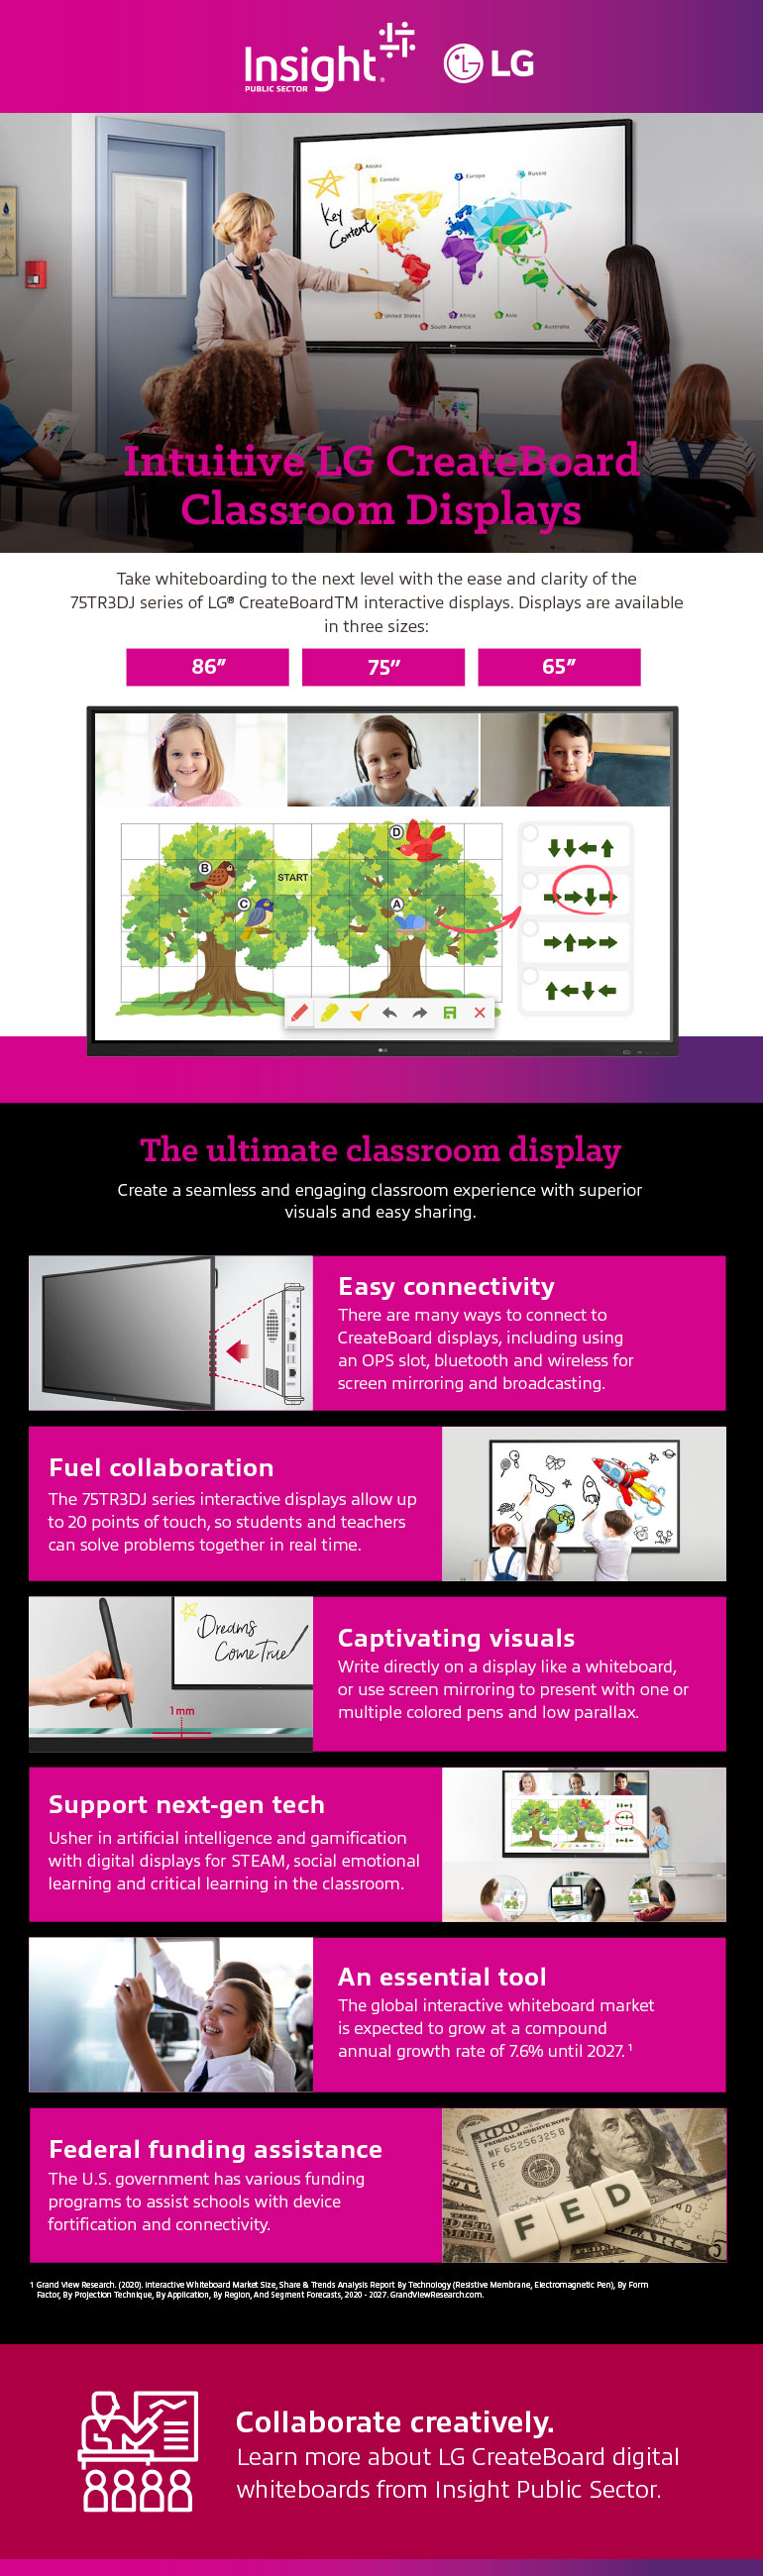 Intuitive LG CreateBoard Classroom Displays infographic